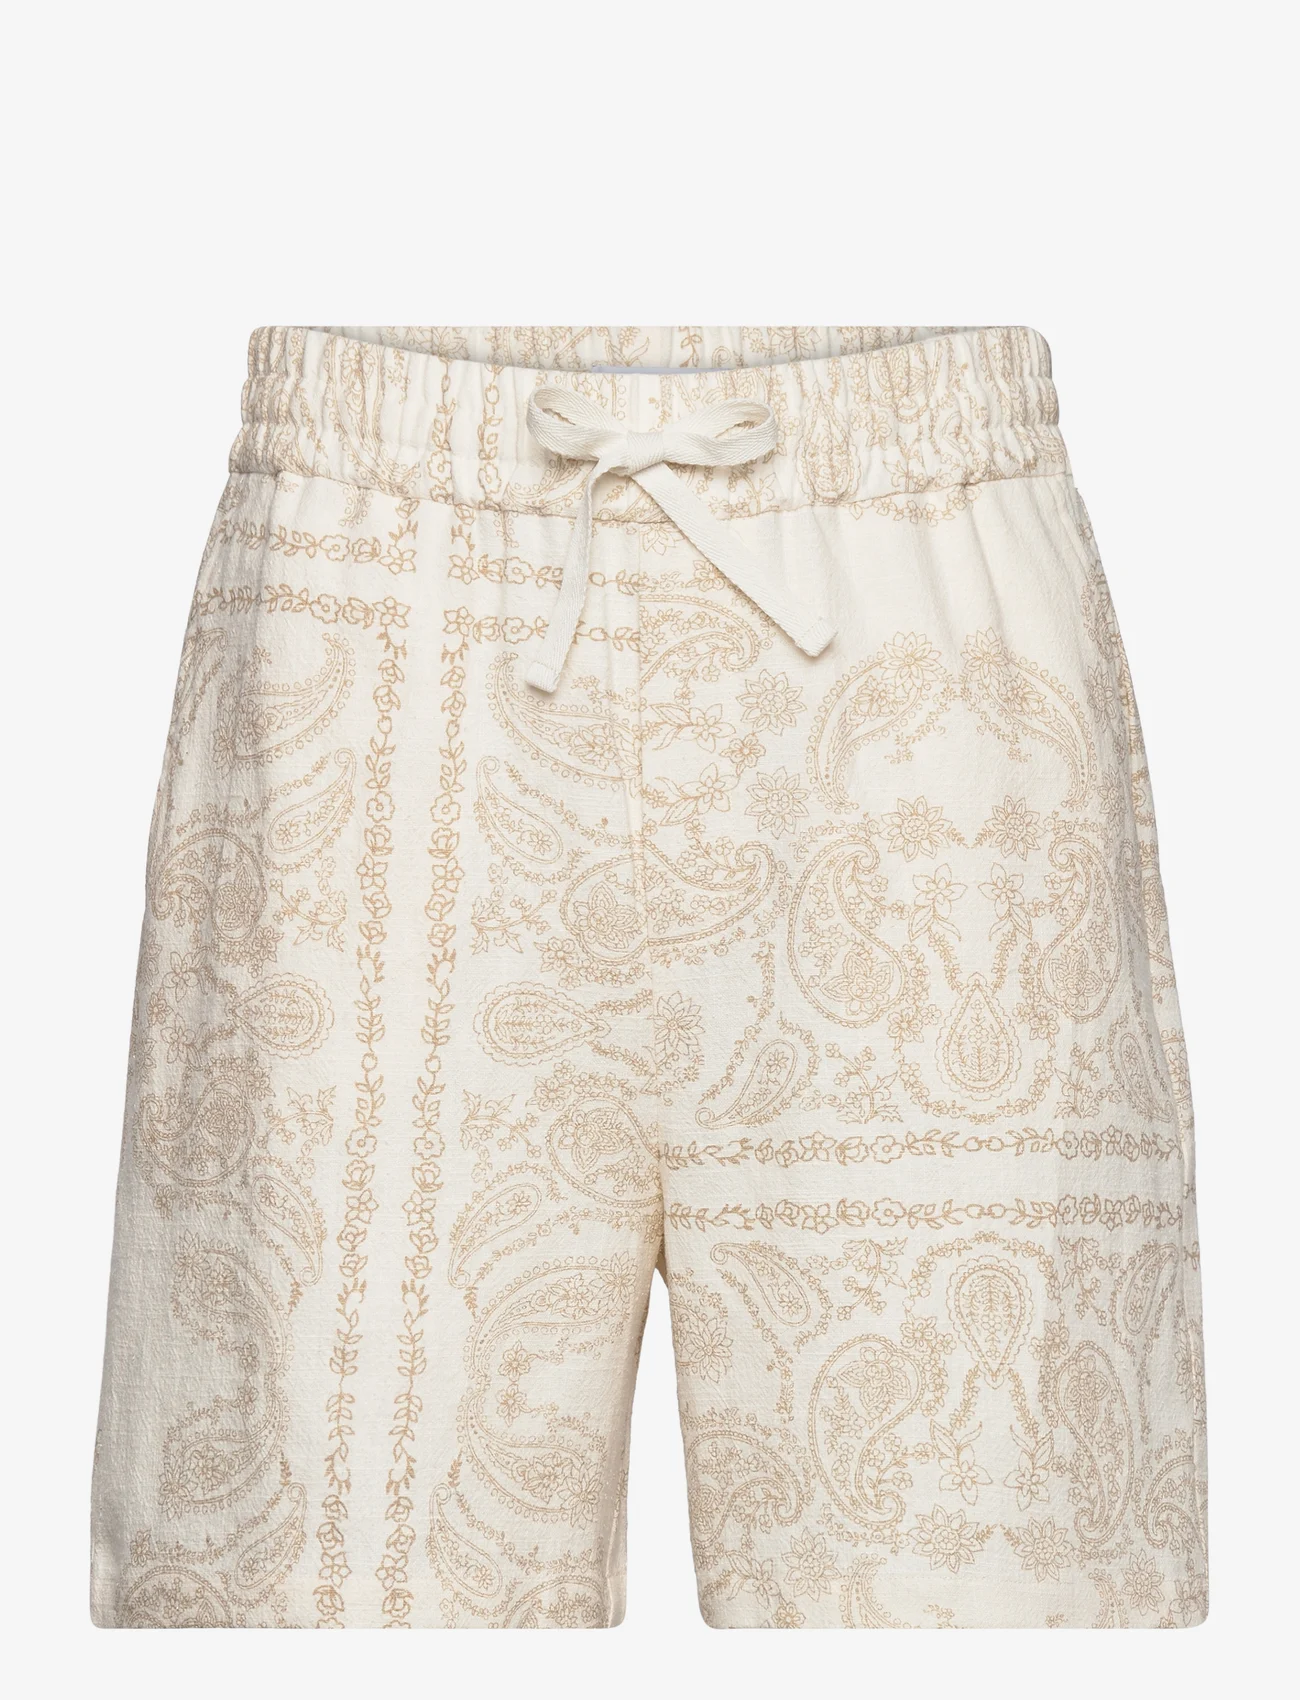 Les Deux - Lesley Paisley Shorts - nordic style - light ivory - 0